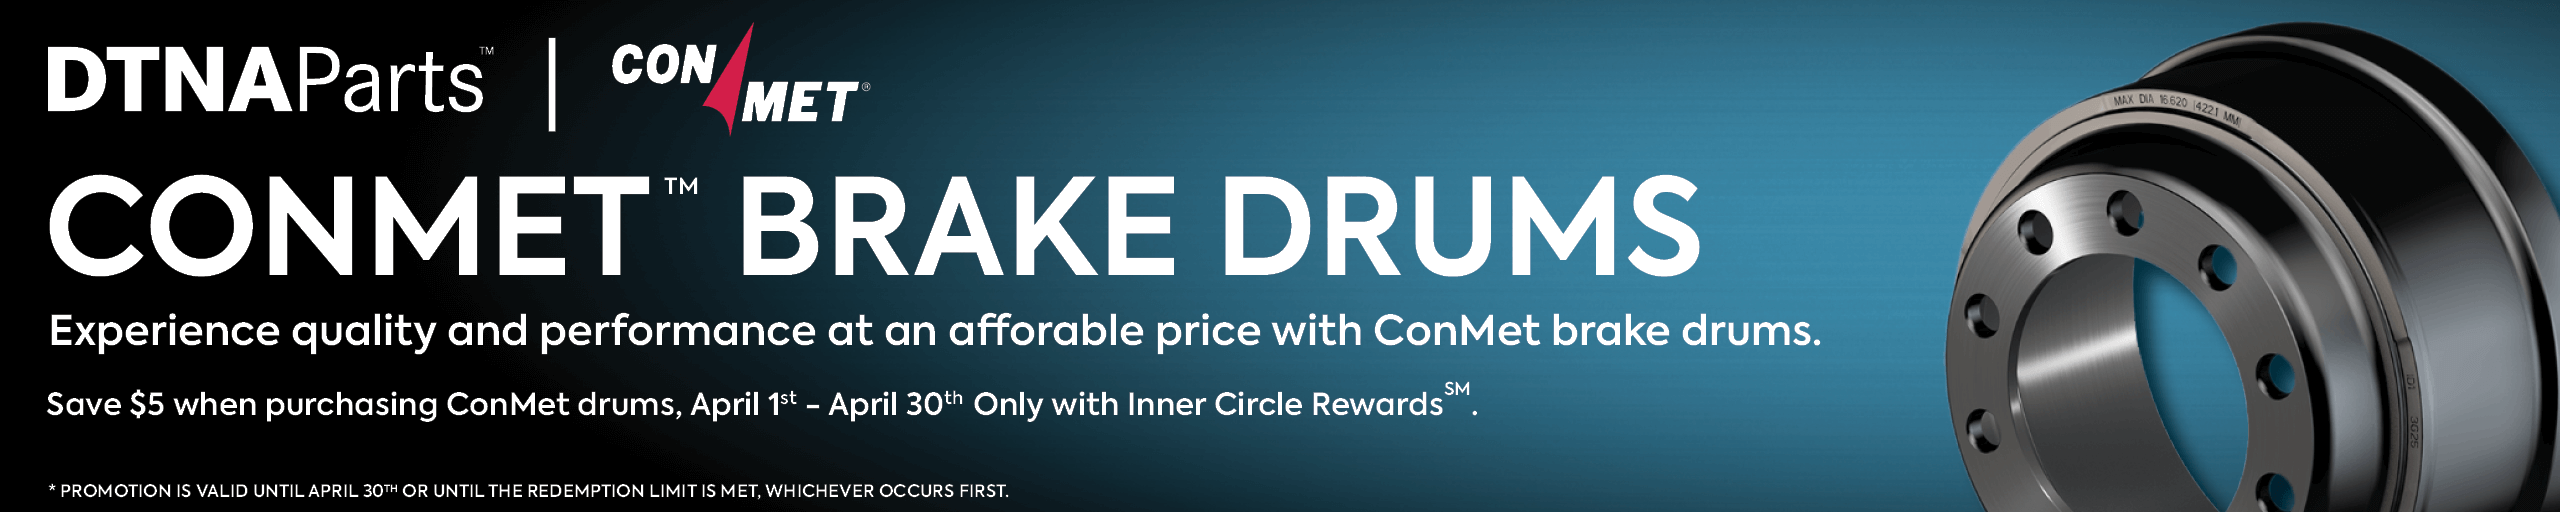 Conmet Brake Drums - Save $5, April 1-30